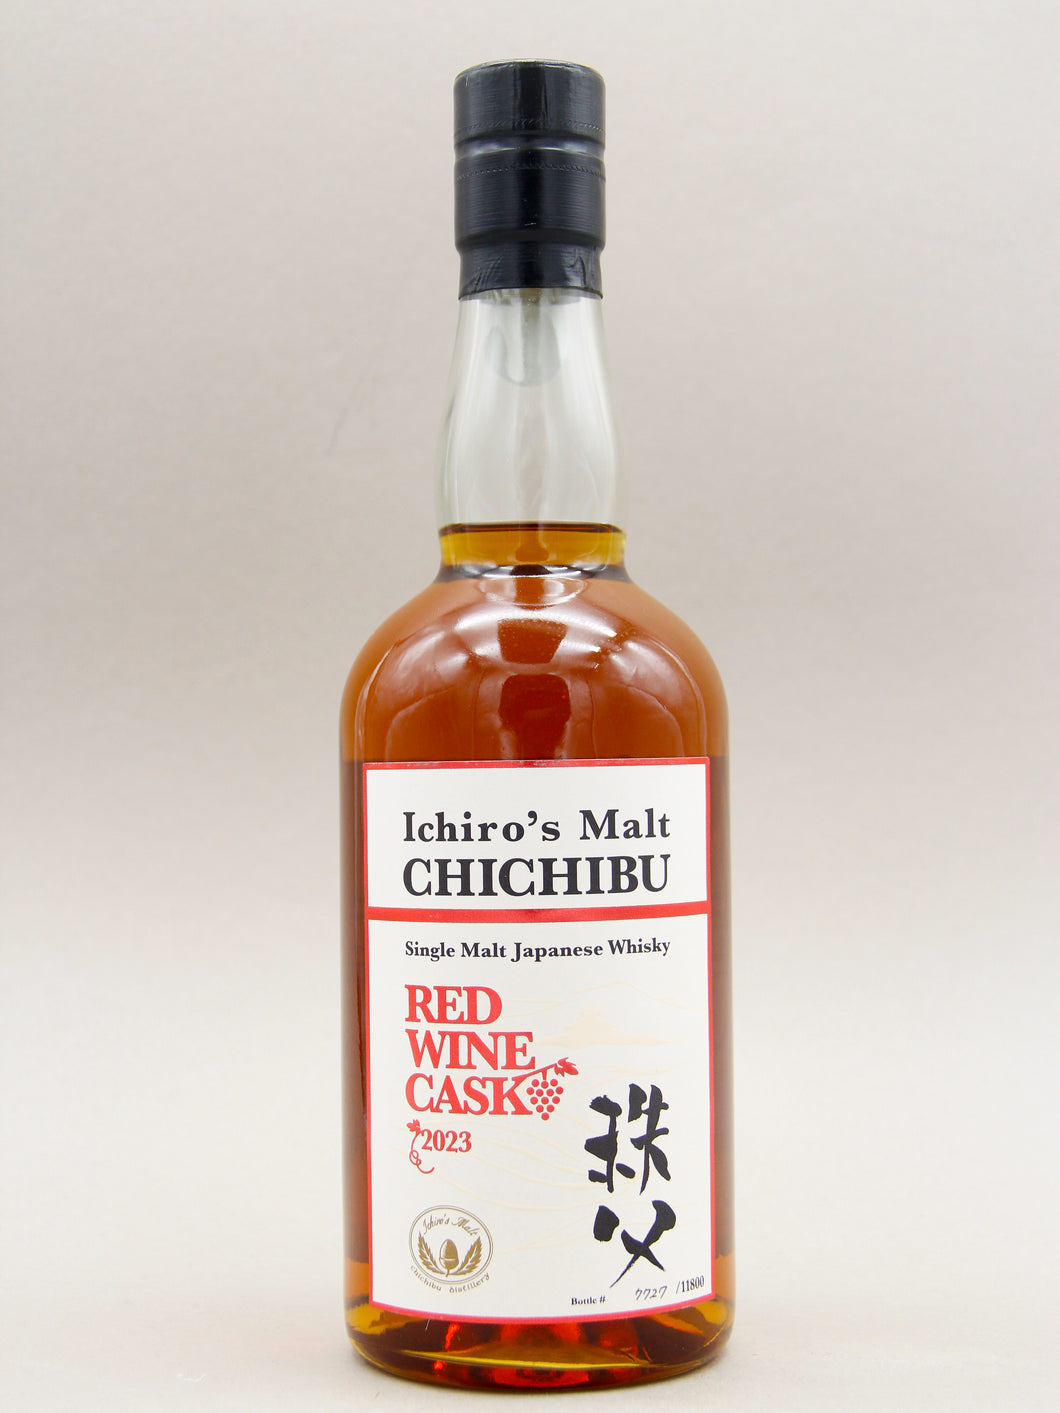 Chichibu, Ichiro's Malt, Red Wine Cask Edition, 2023, Japan, Single Malt Whisky (50.5%, 70cl)